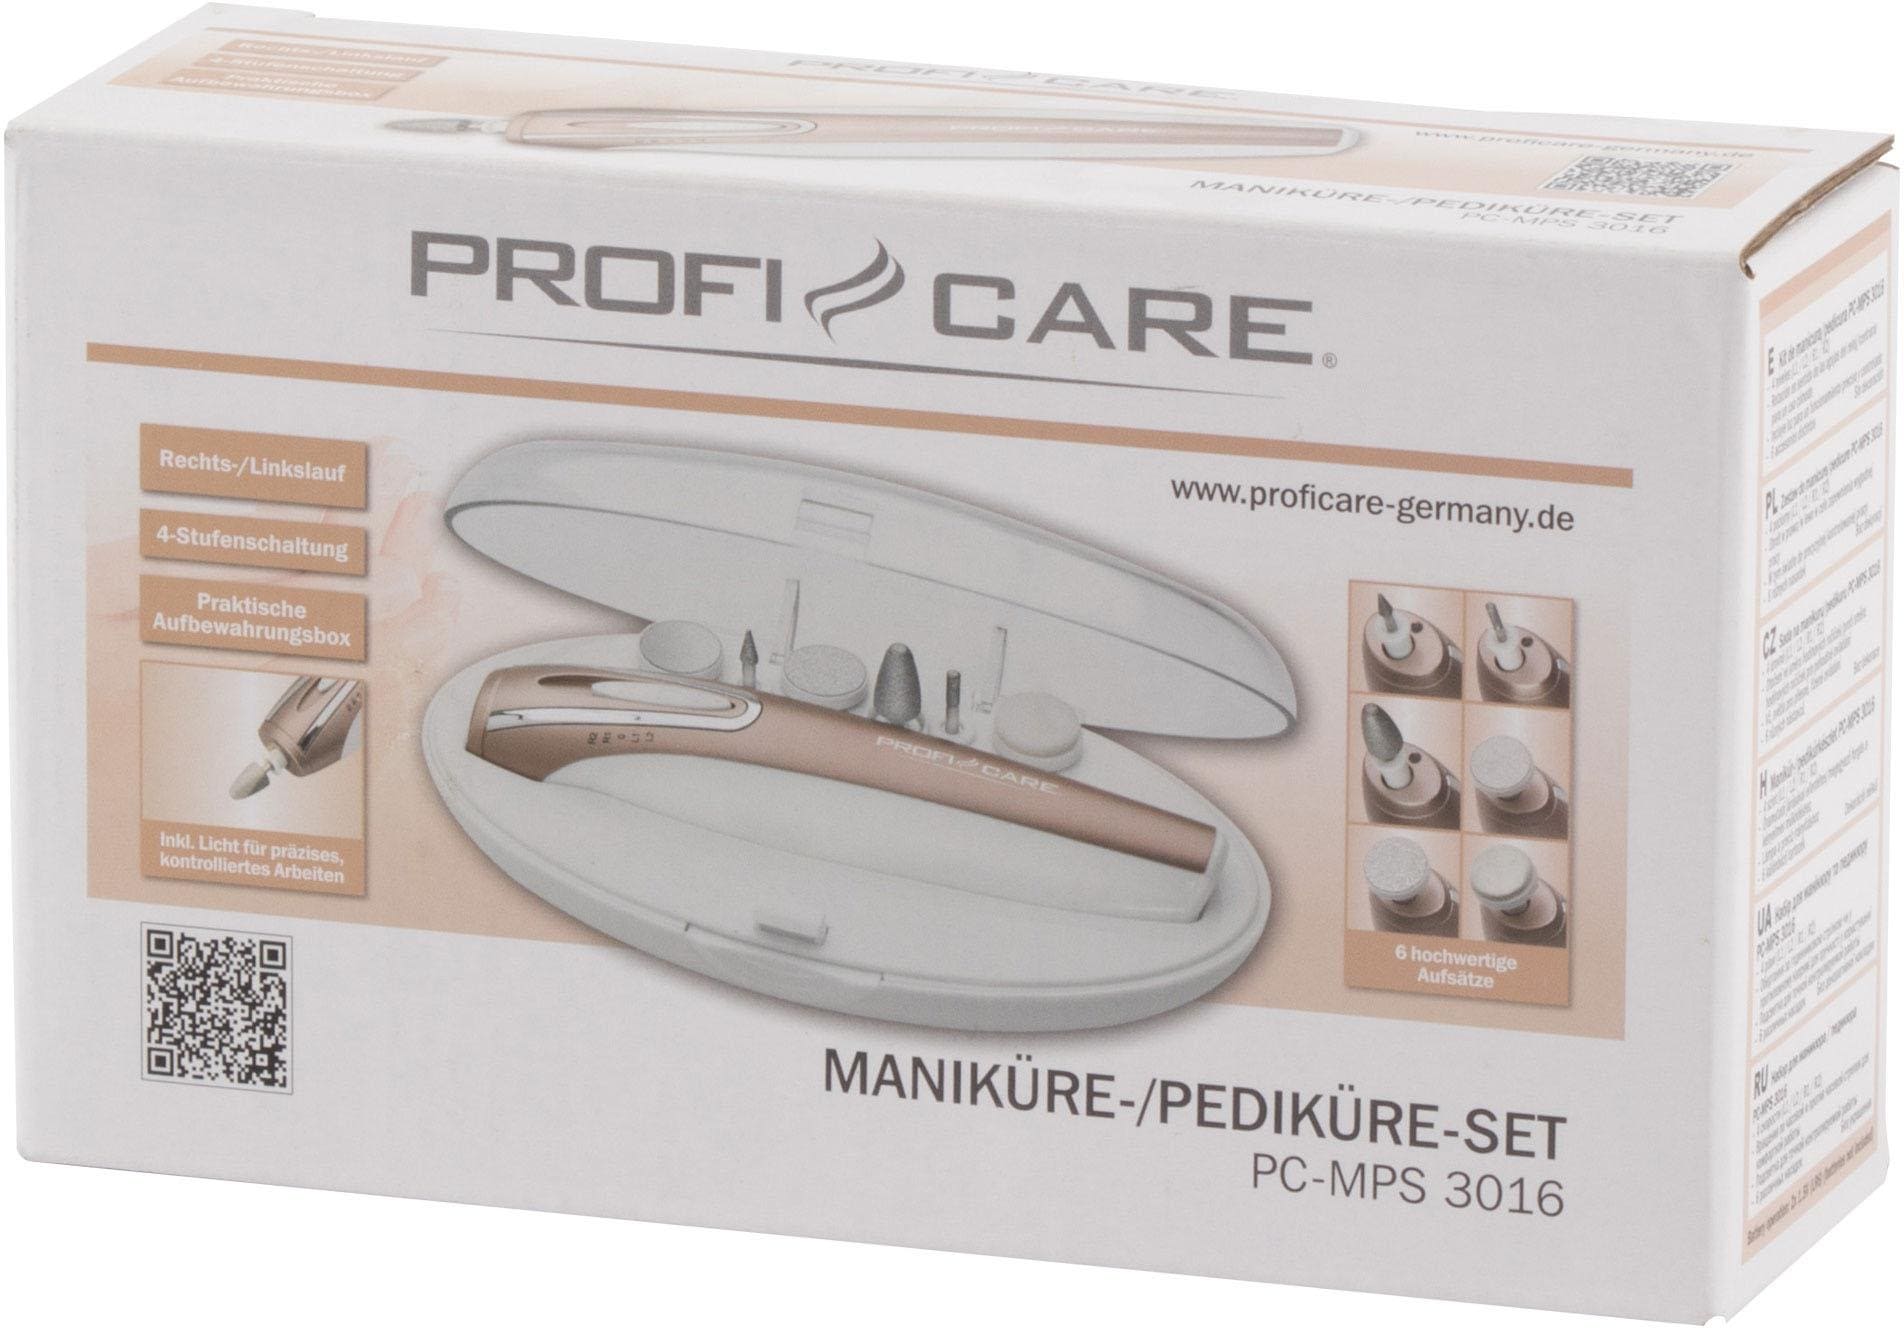 ProfiCare Maniküre-Pediküre-Set »PC-MPS 3016« jetzt kaufen bei OTTO